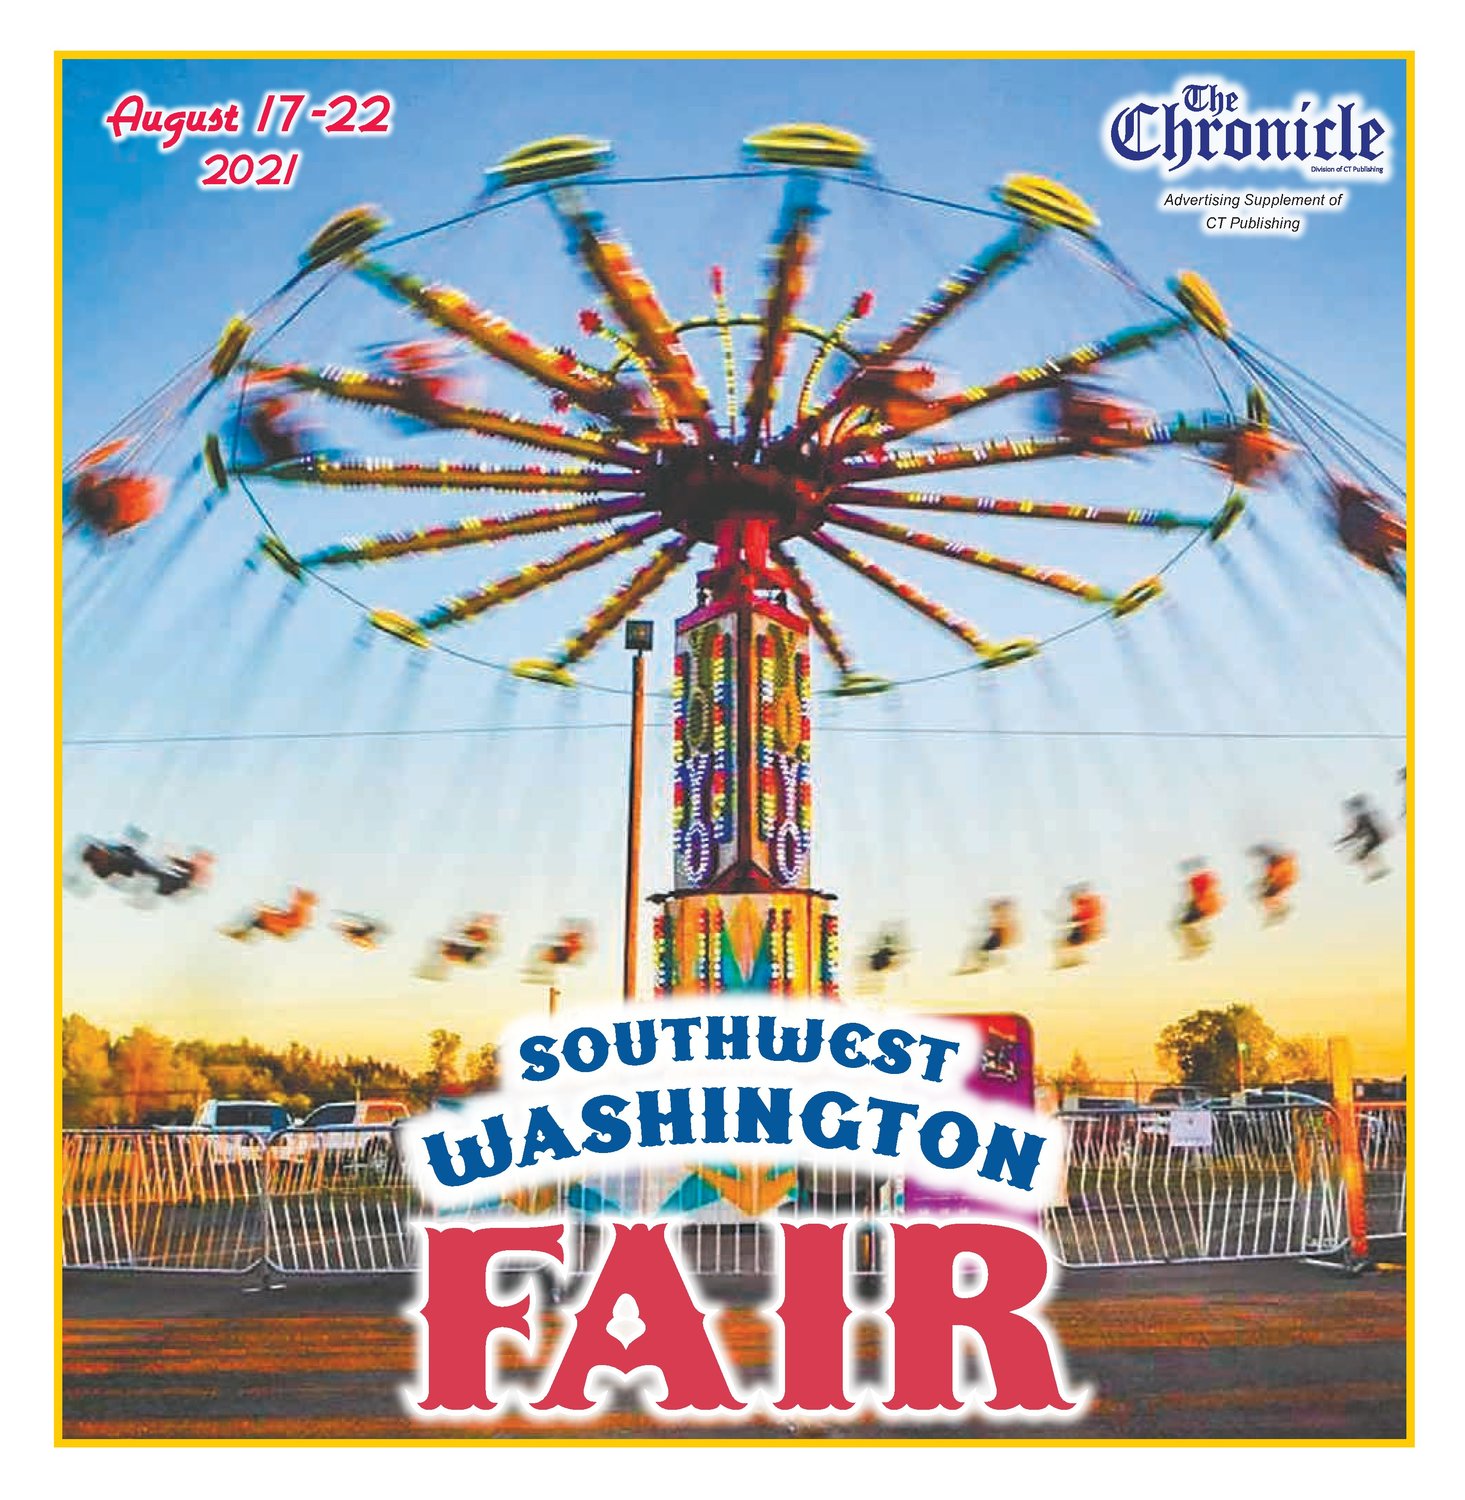 SW Washington Fair Guide | The Daily Chronicle